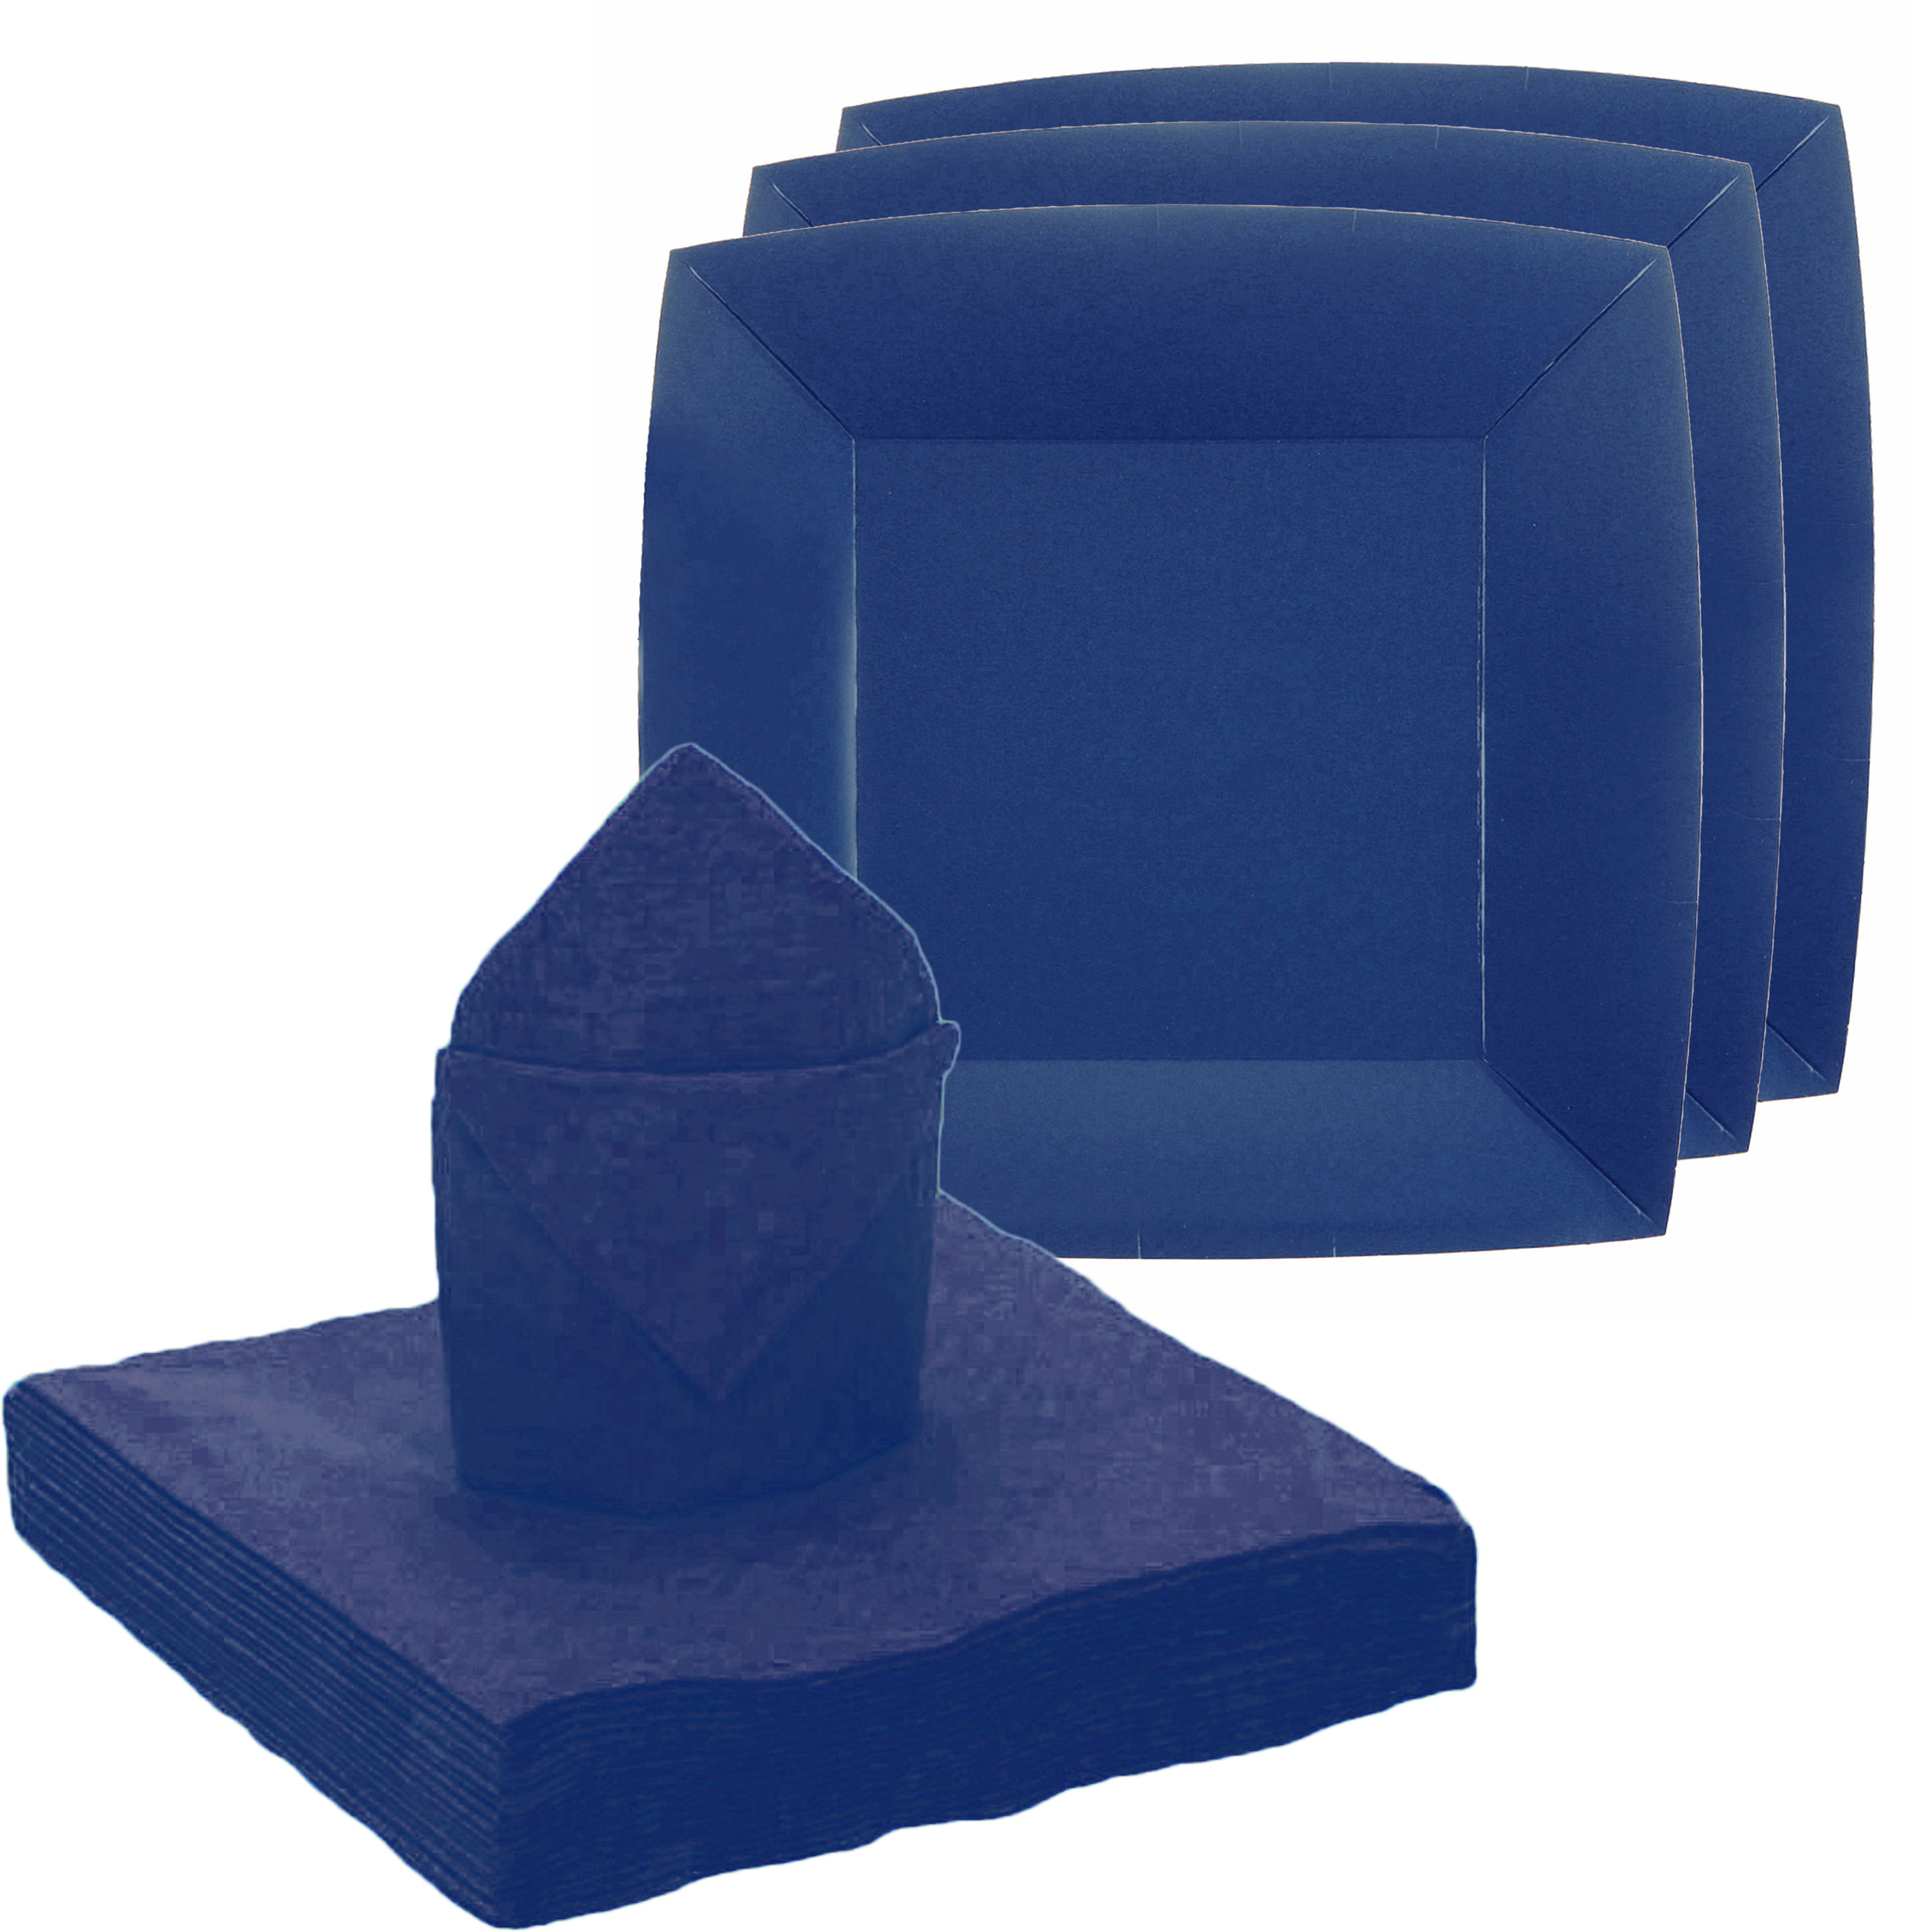 Feest/verjaardag servies set 20x gebaksbordjes/25x servetten - kobalt blauw - karton